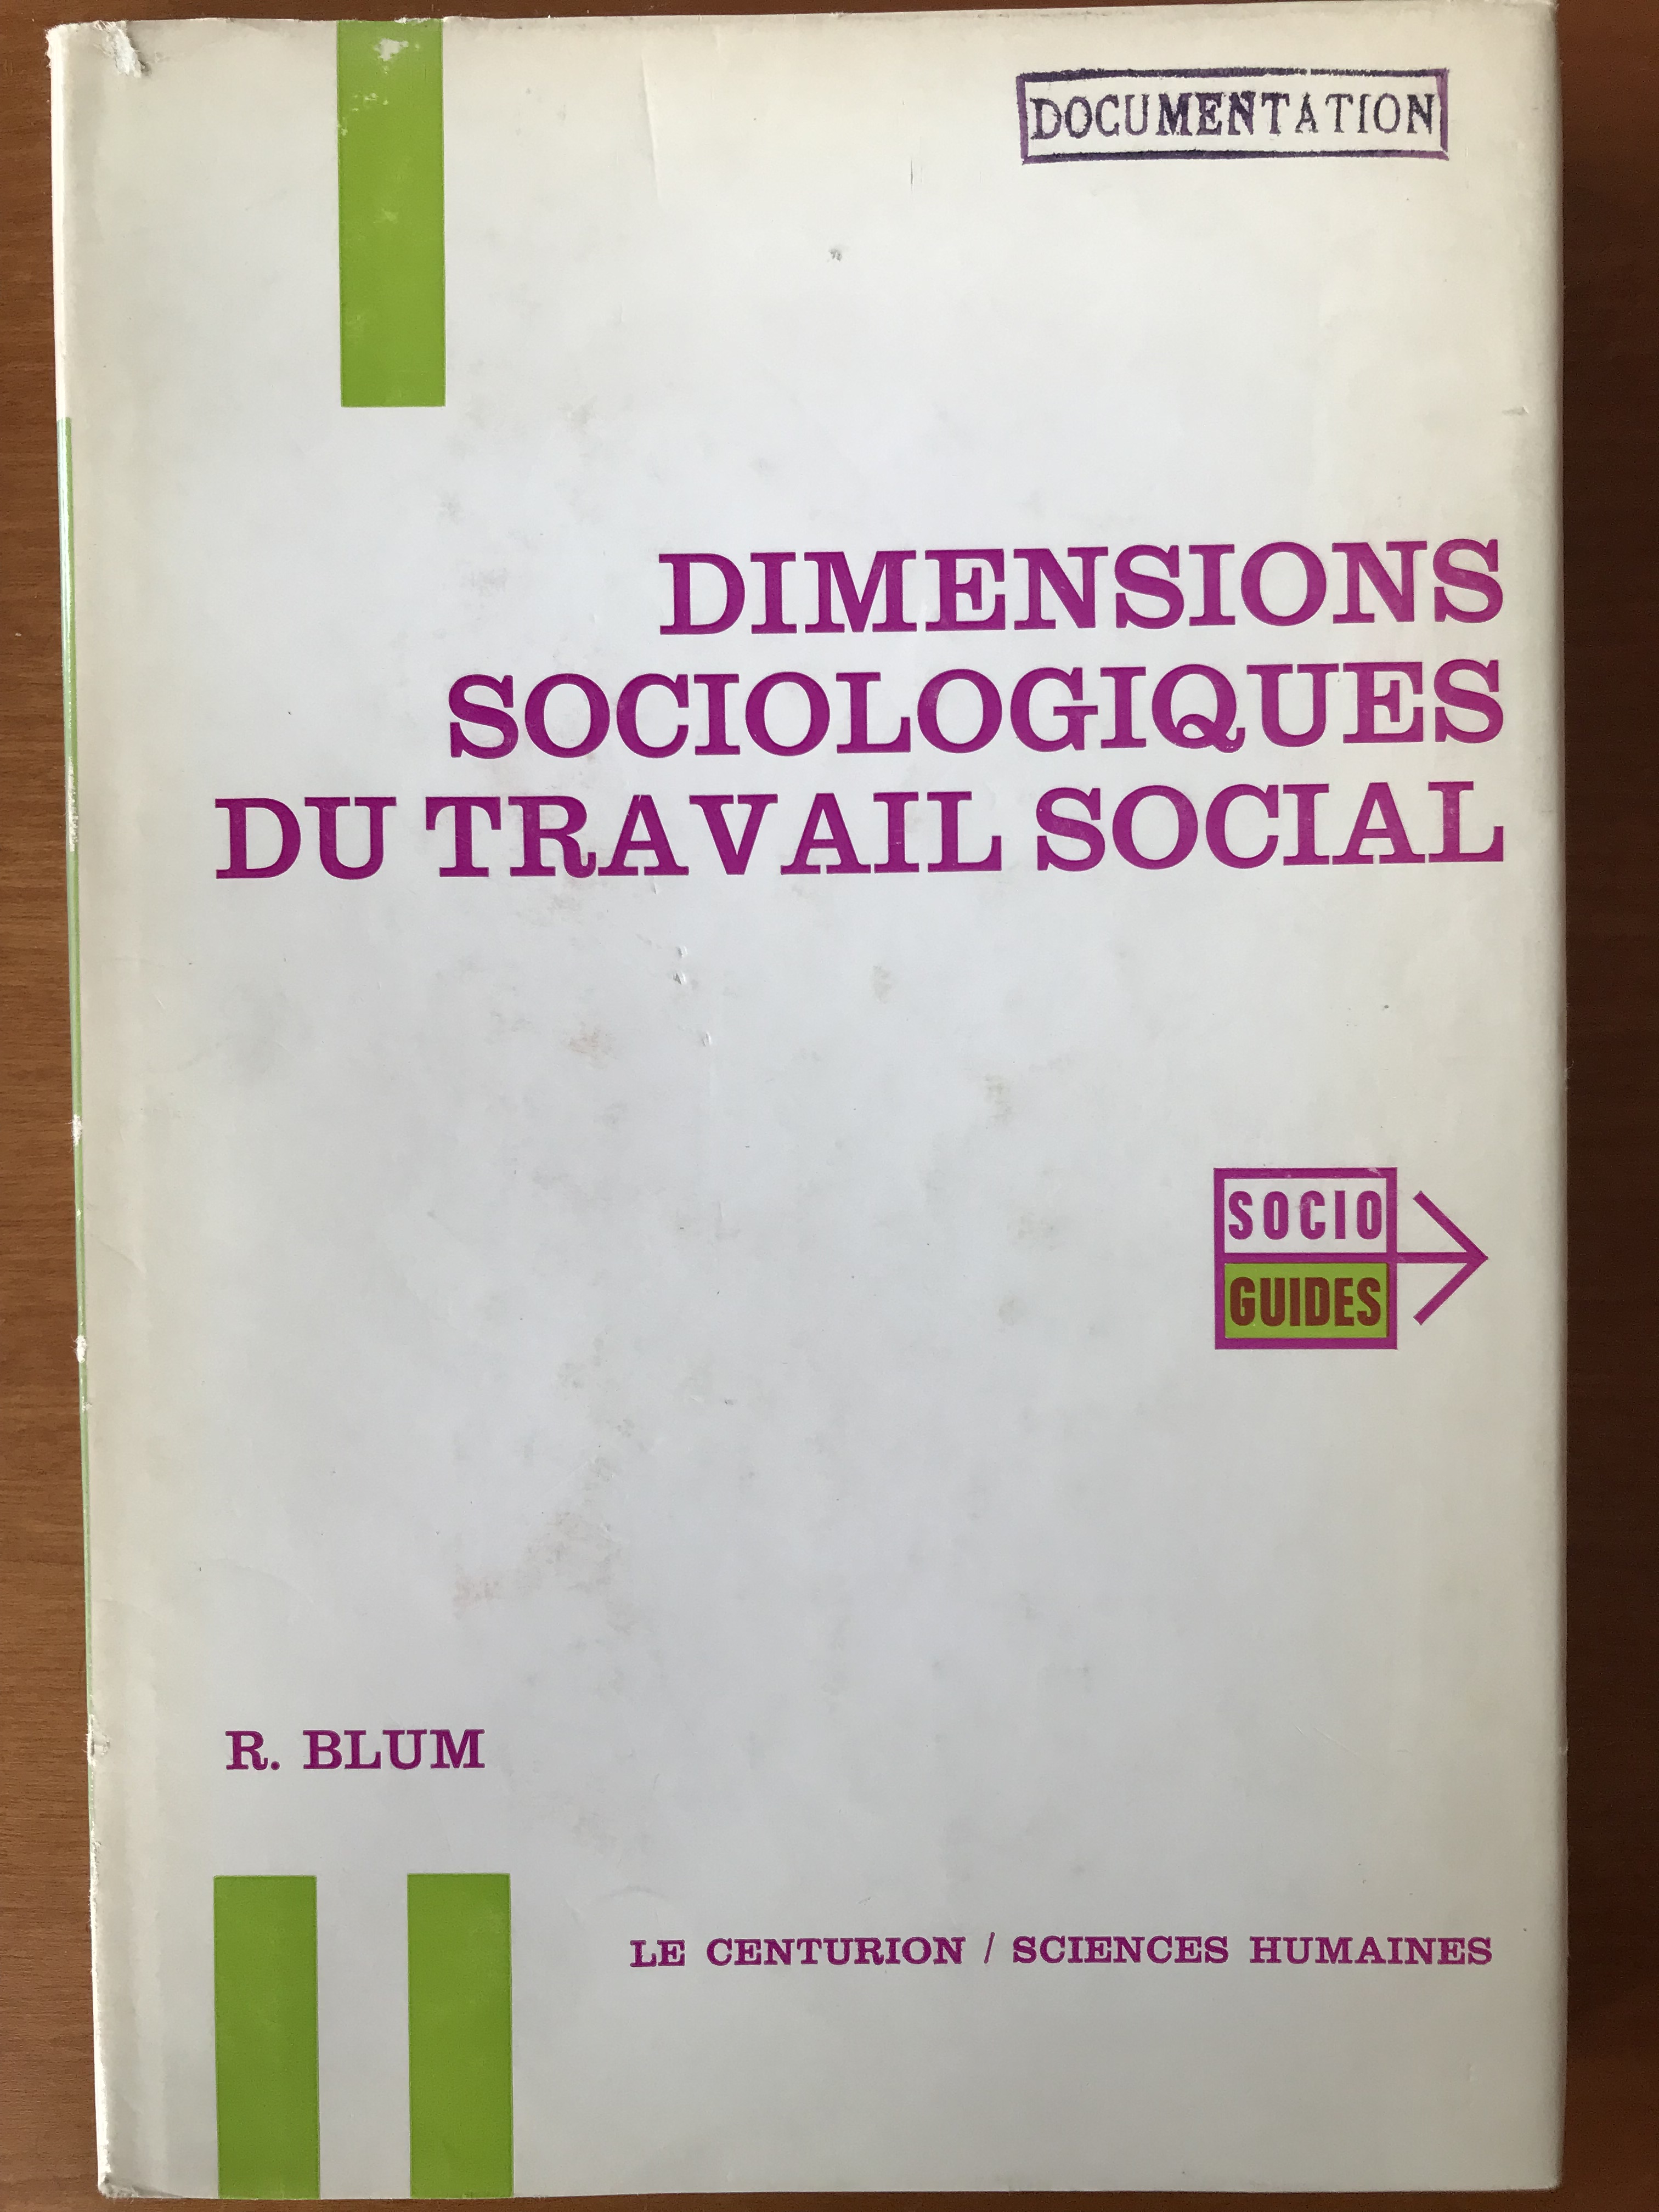 Dimensions sociologiques du travail social